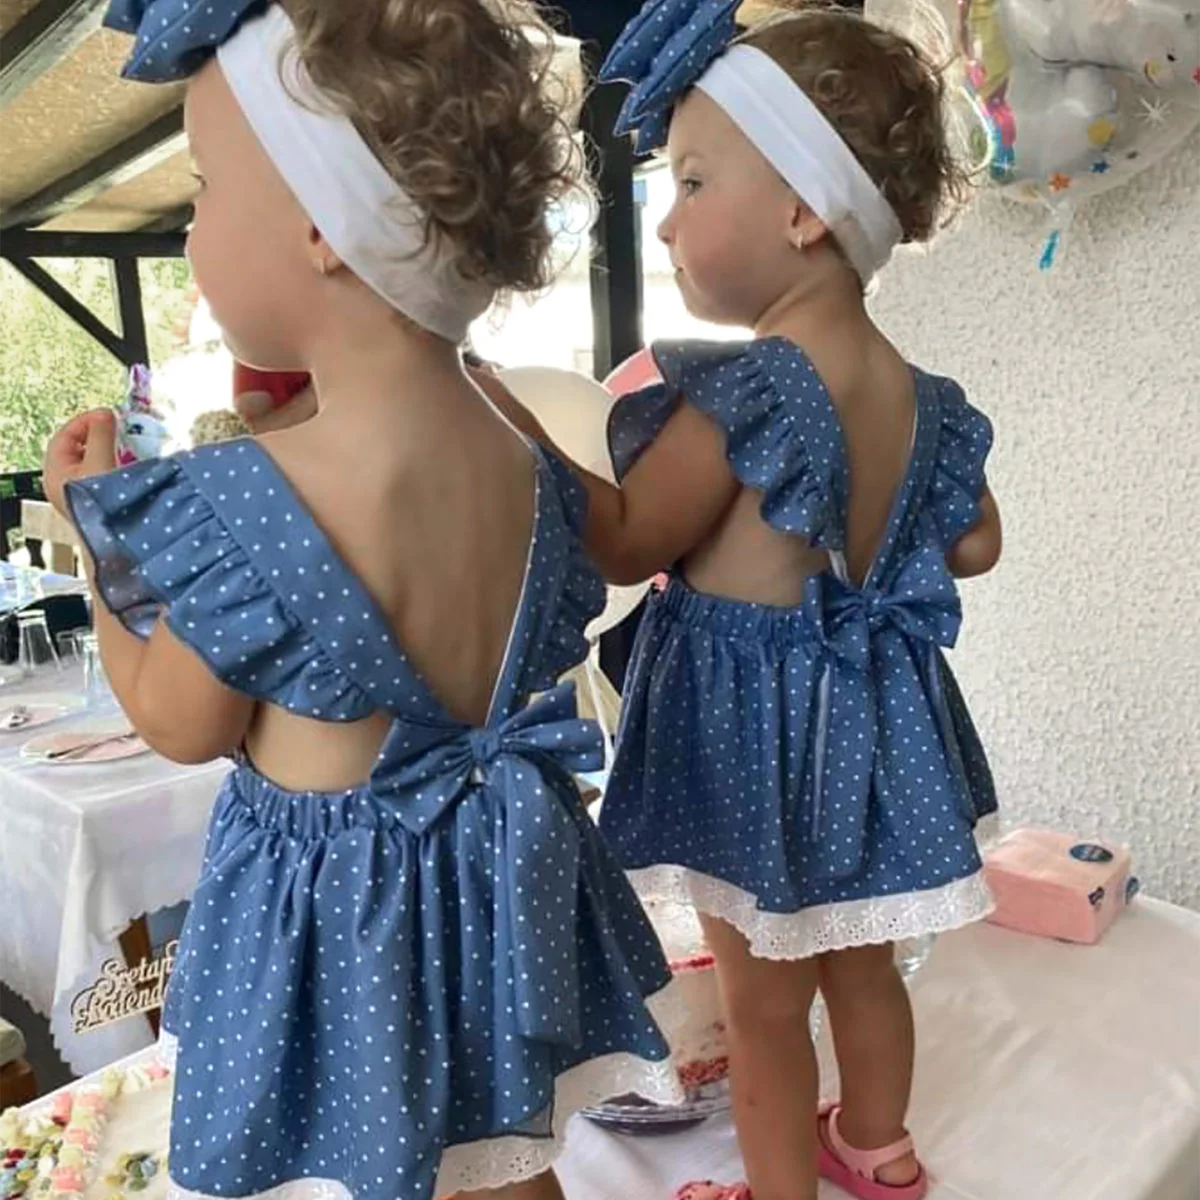 plave polka haljine za blizanke